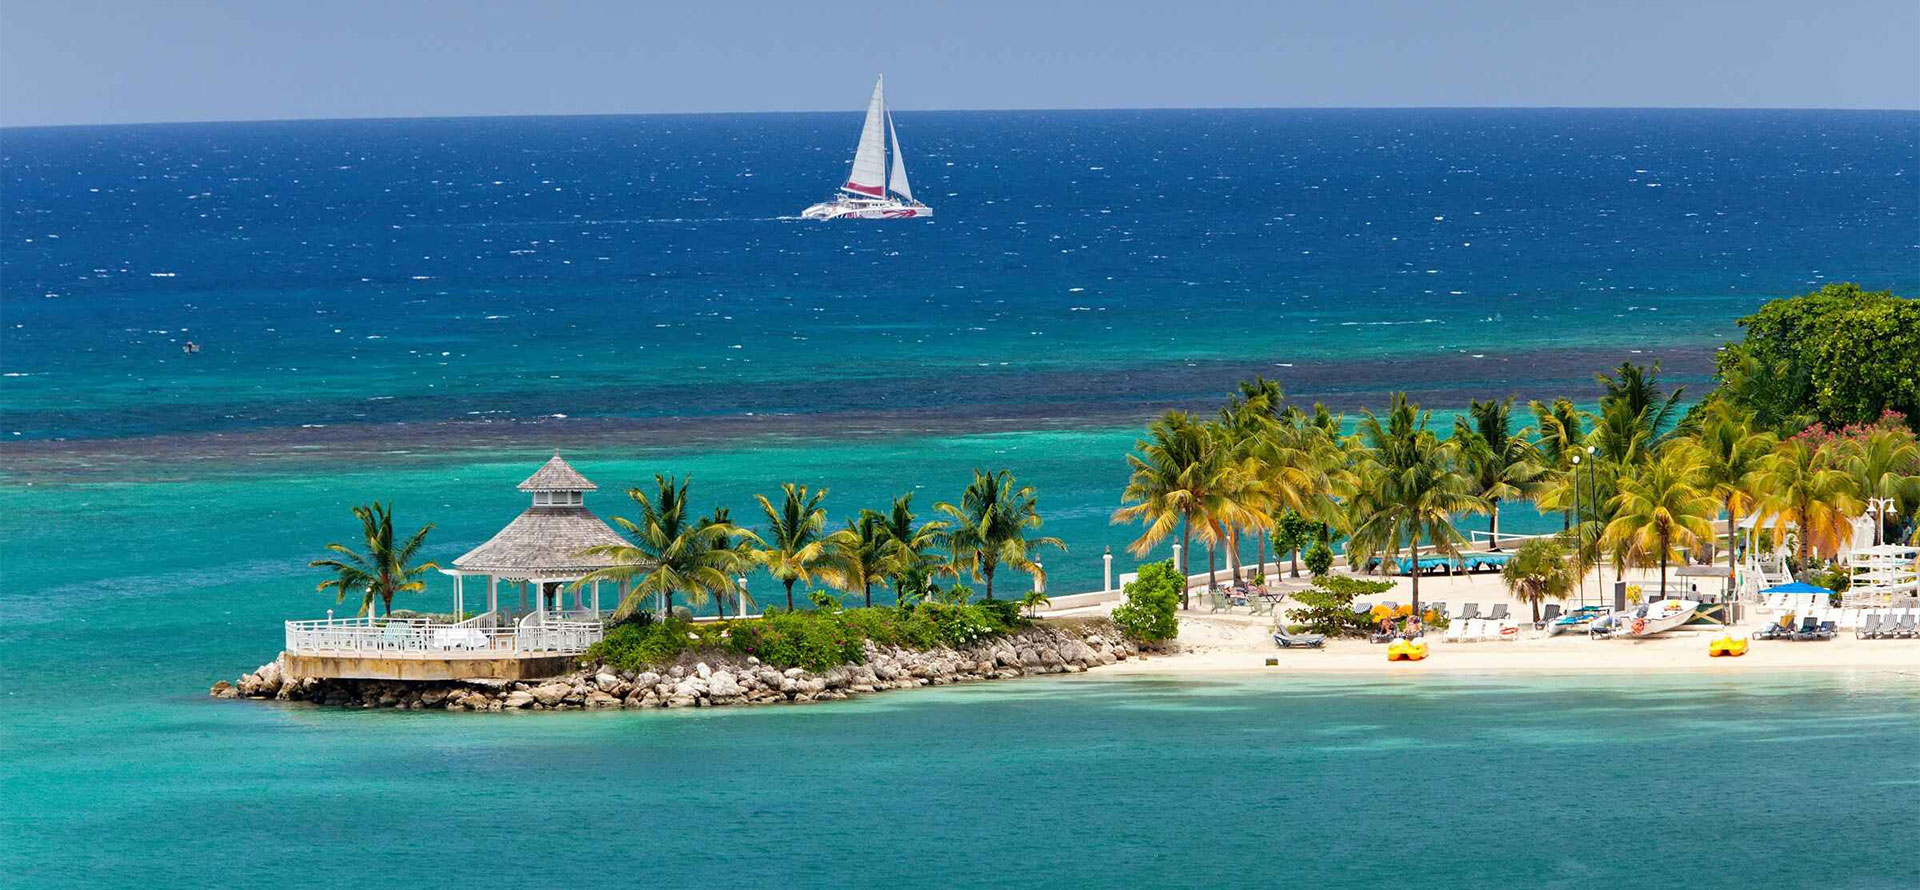 Jamaica vs cancun resort.